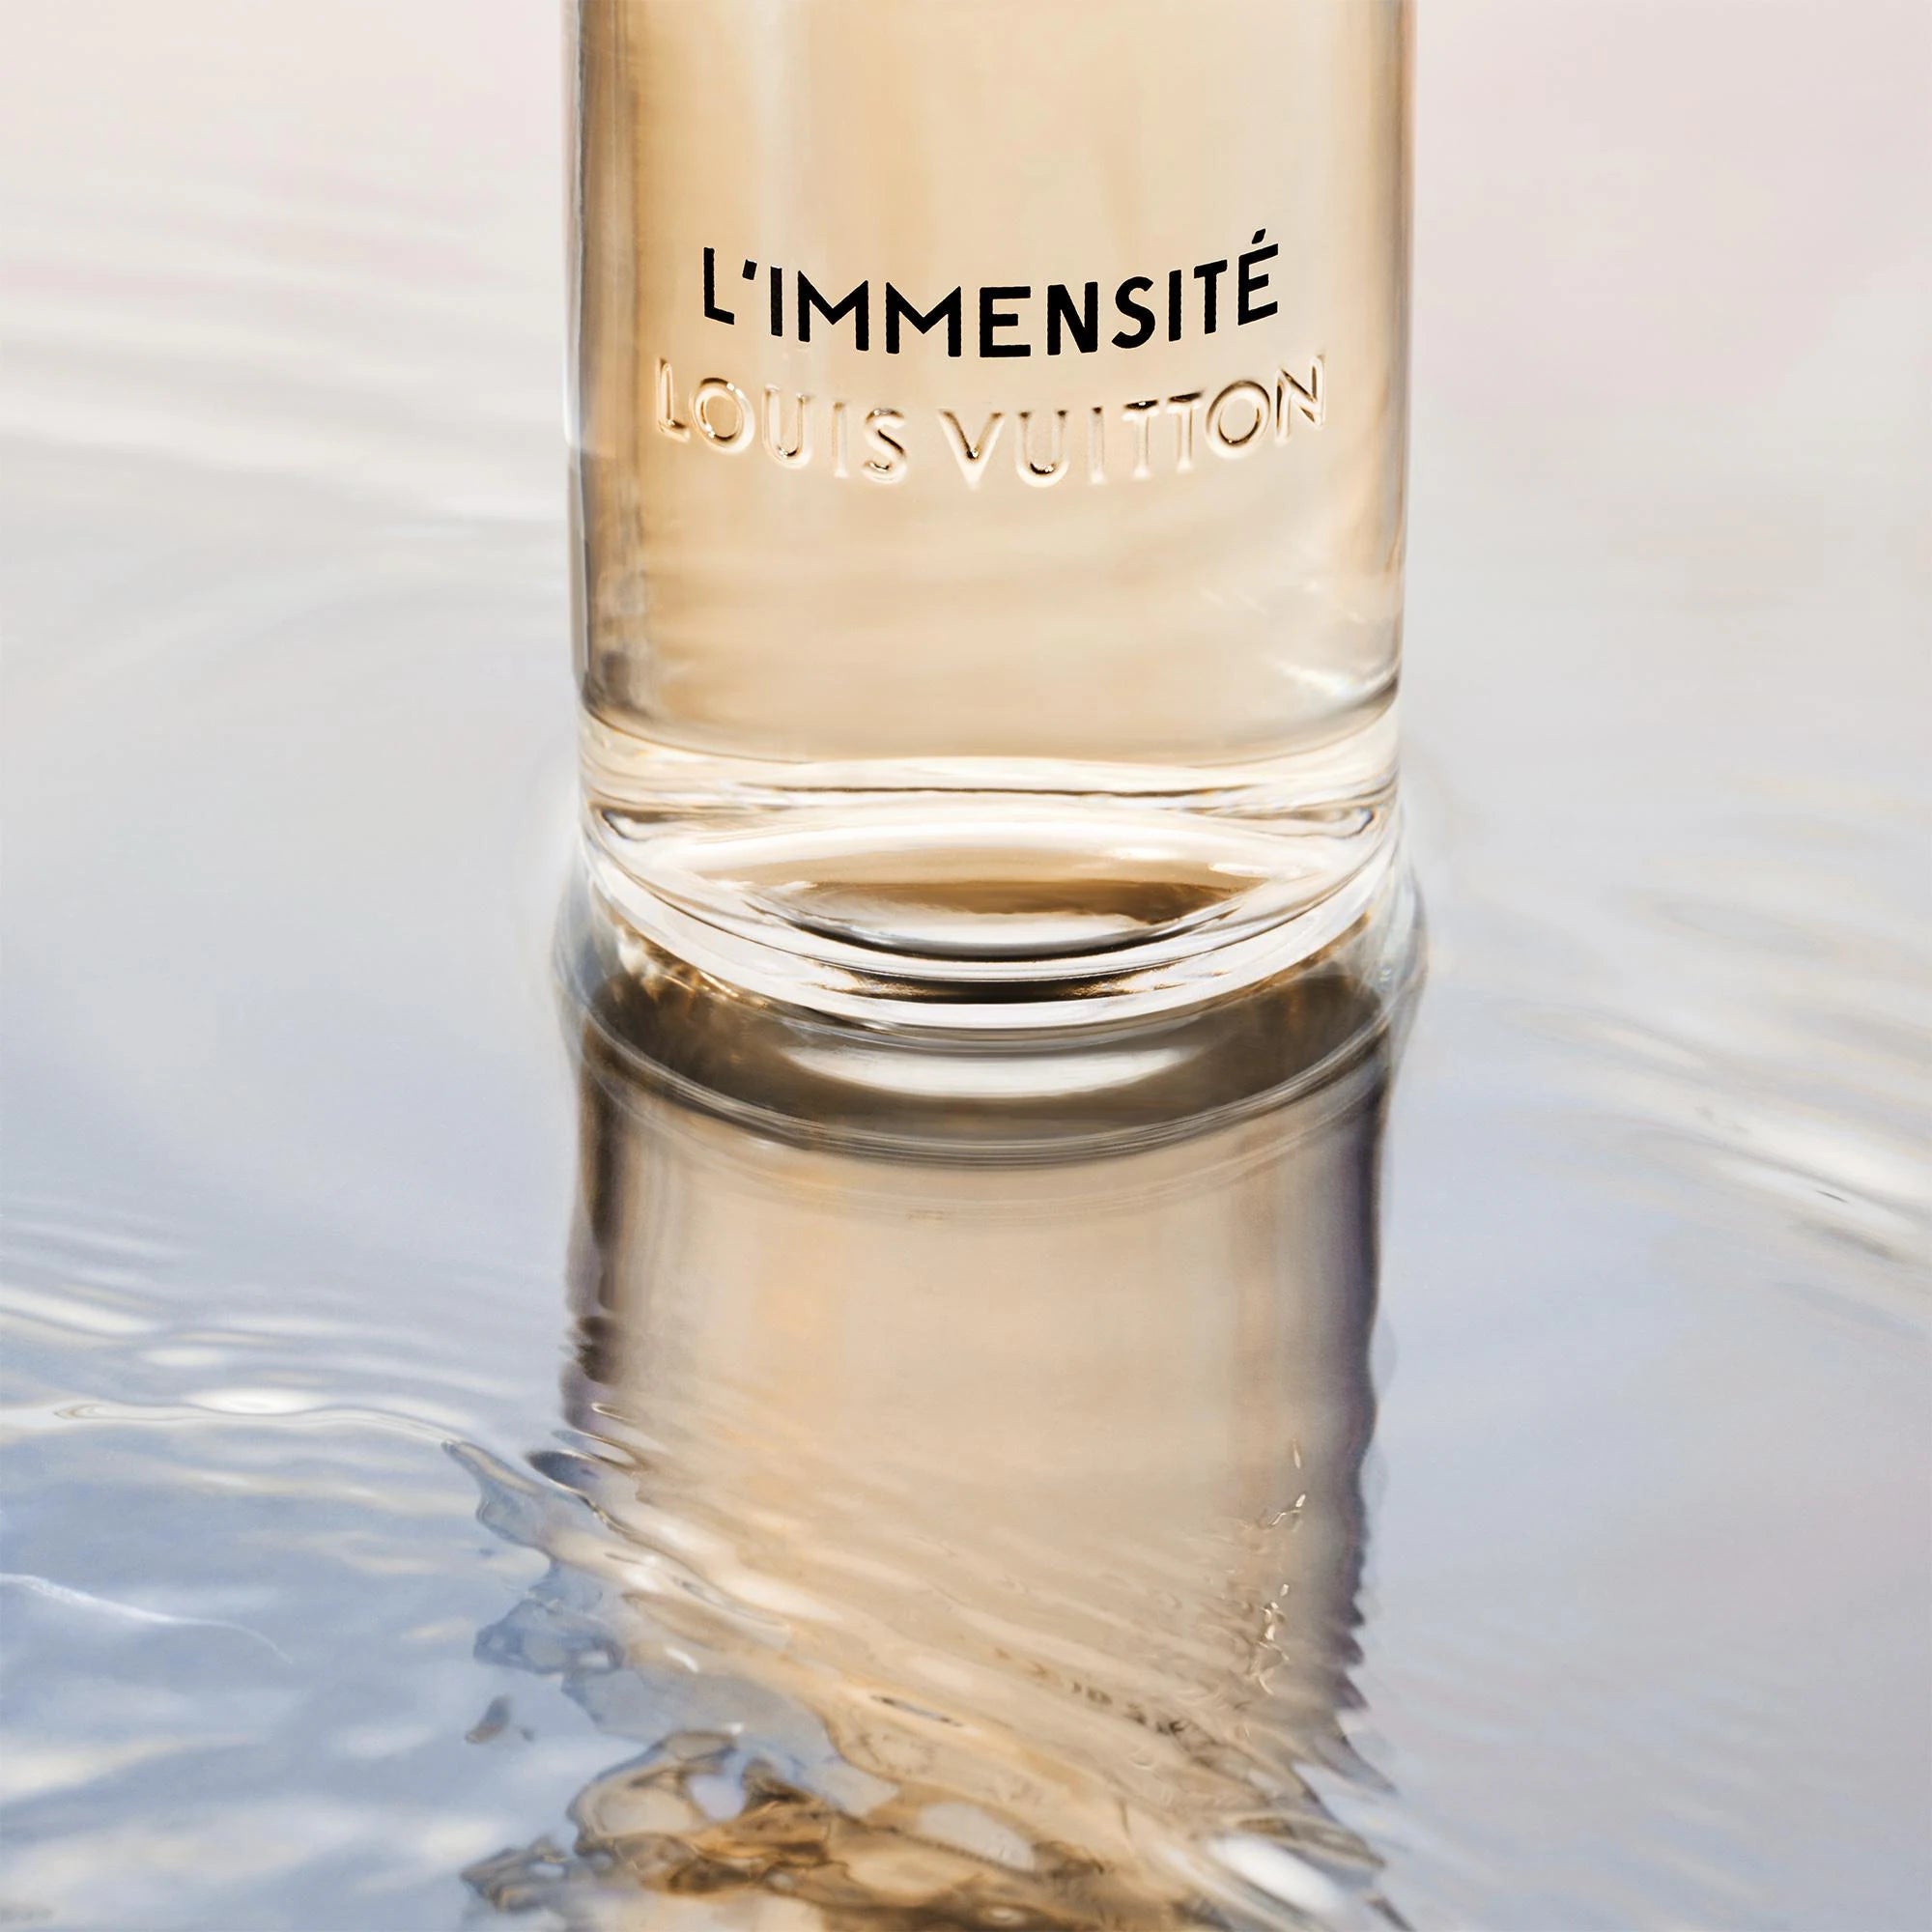 Louis Vuitton L'Immensite EDP | My Perfume Shop Australia